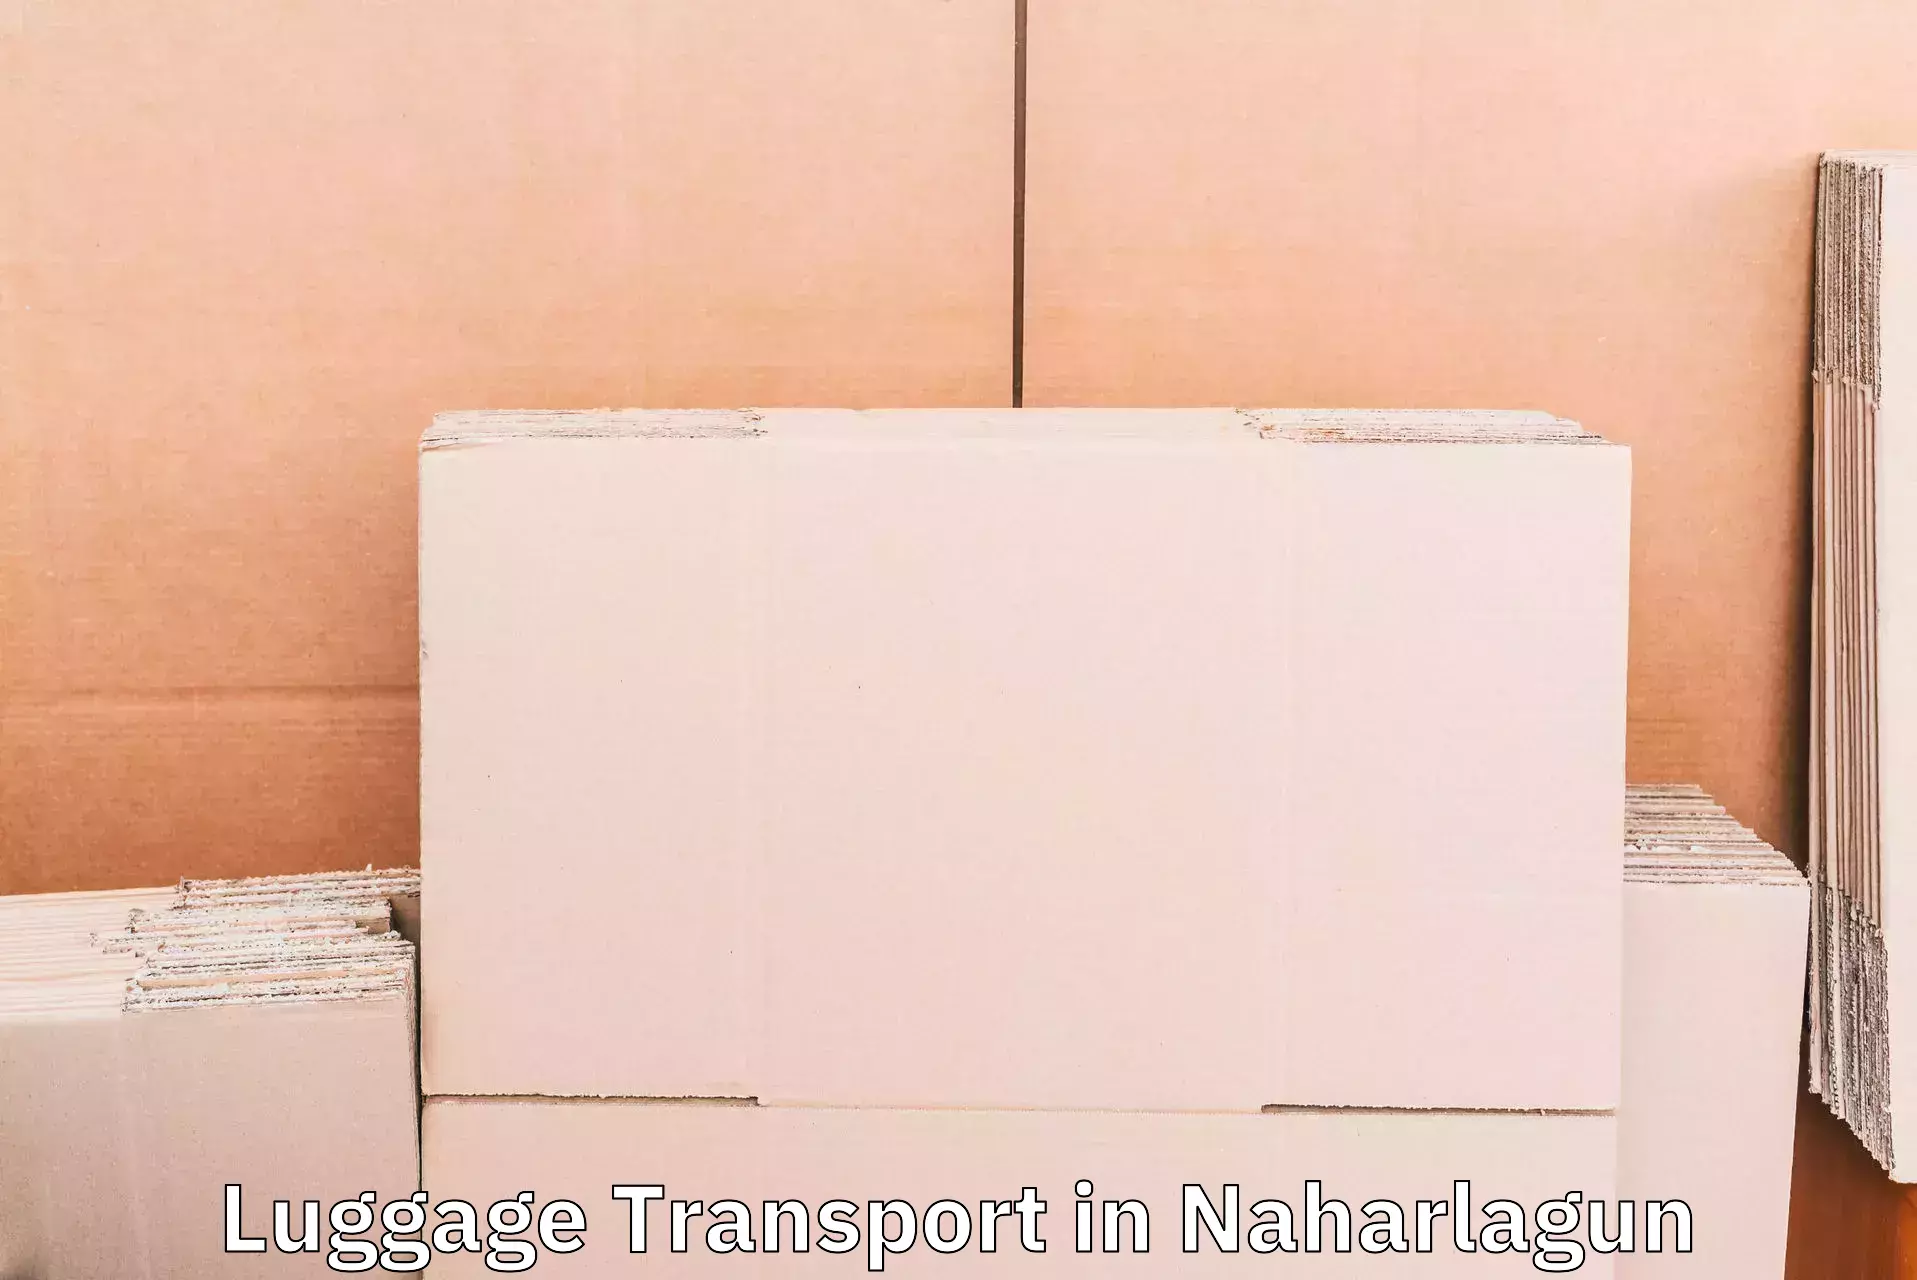 Luggage transfer service in Naharlagun